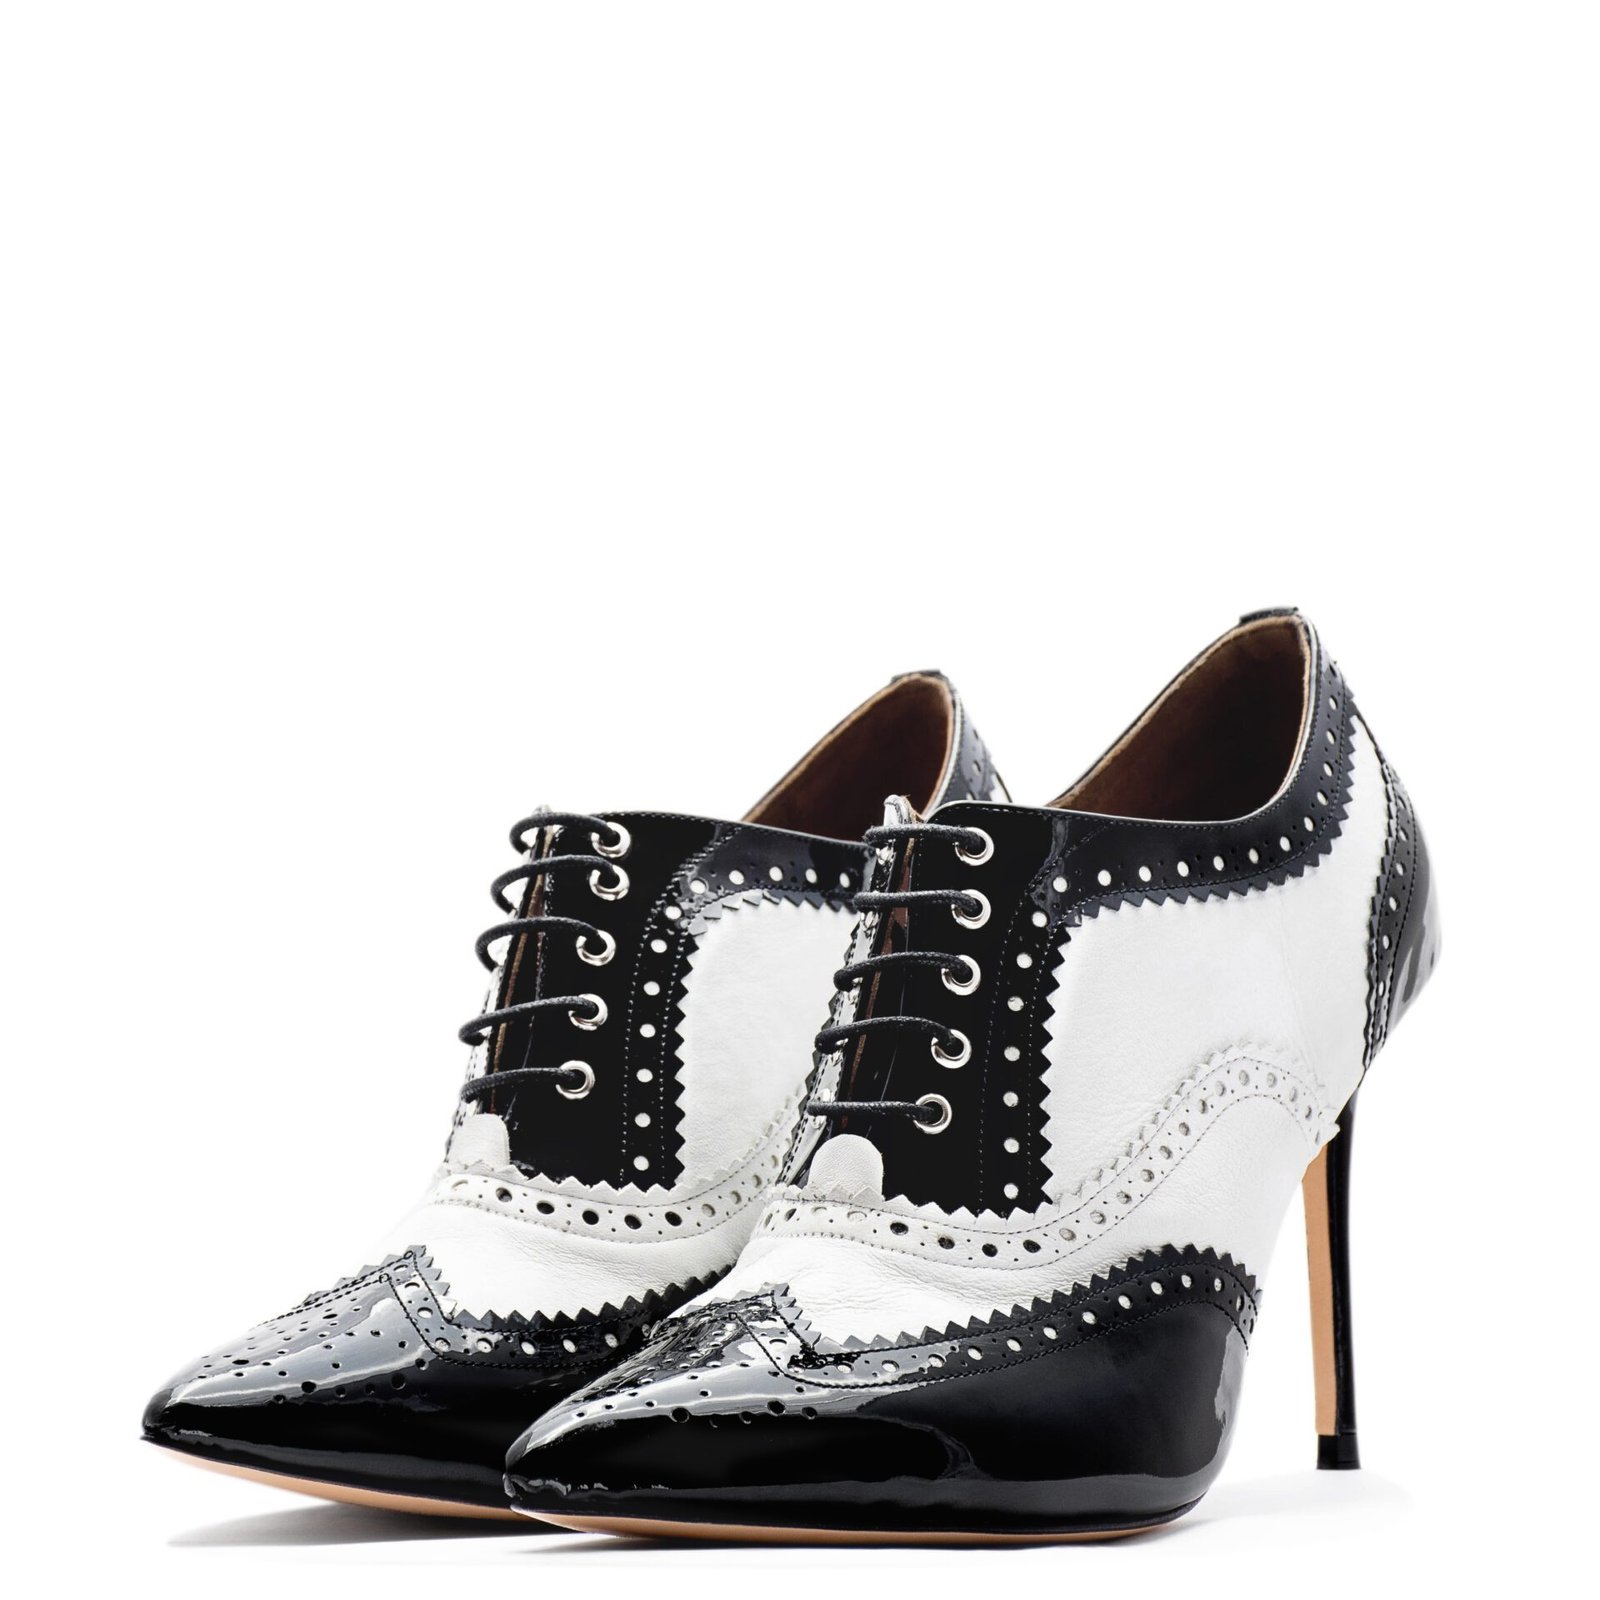 black & white oxford pump heels for men & women